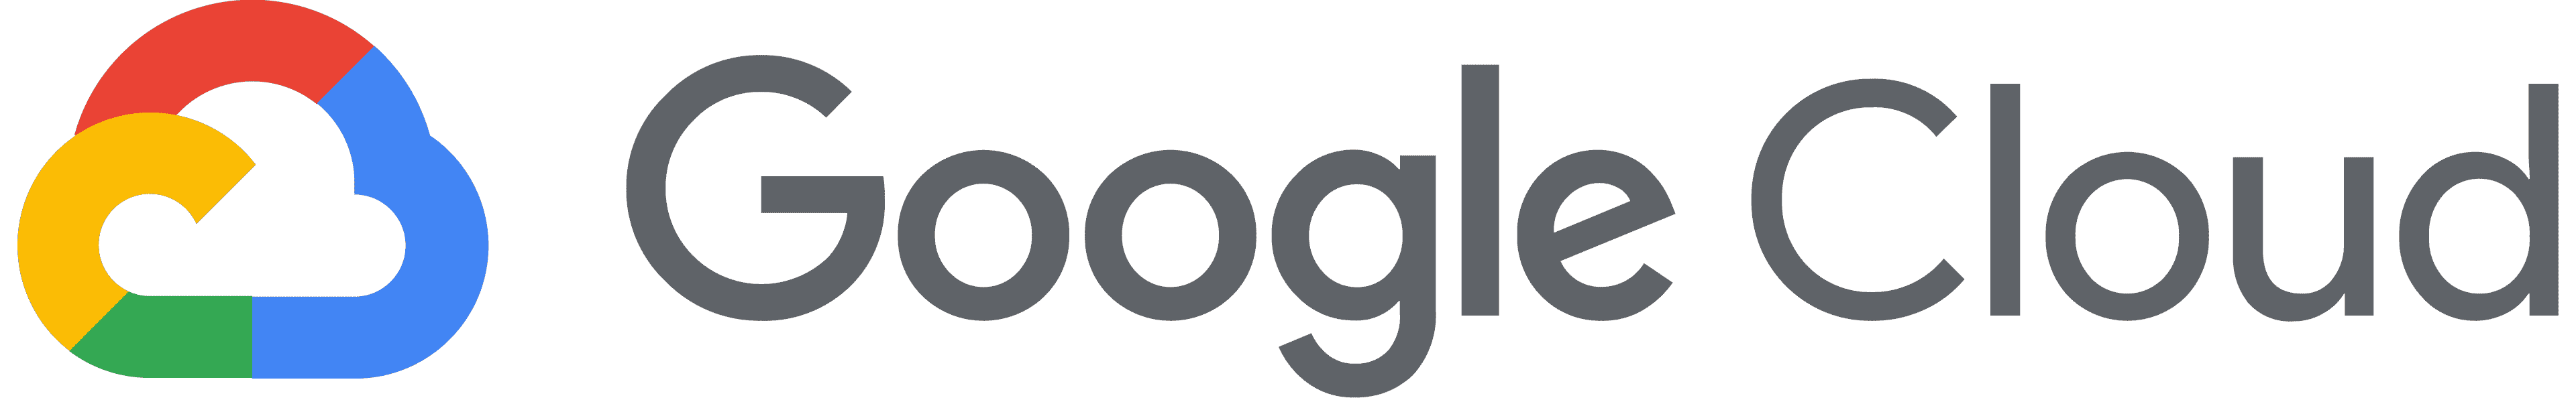 Google_Cloud